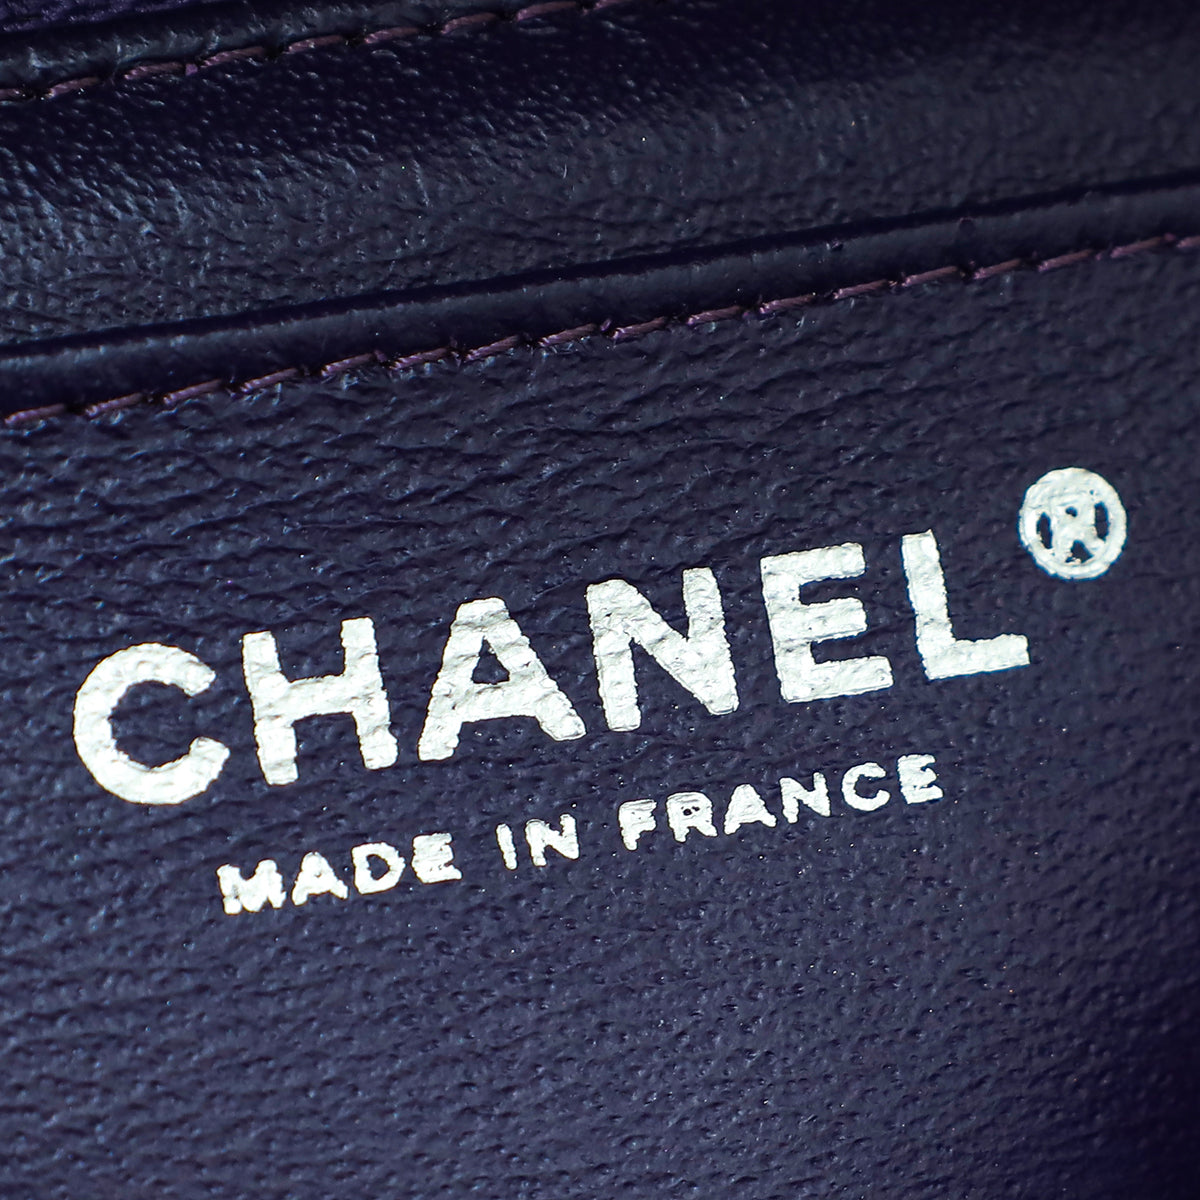 Chanel Dark Violet CC Classic Mini Square Flap Bag